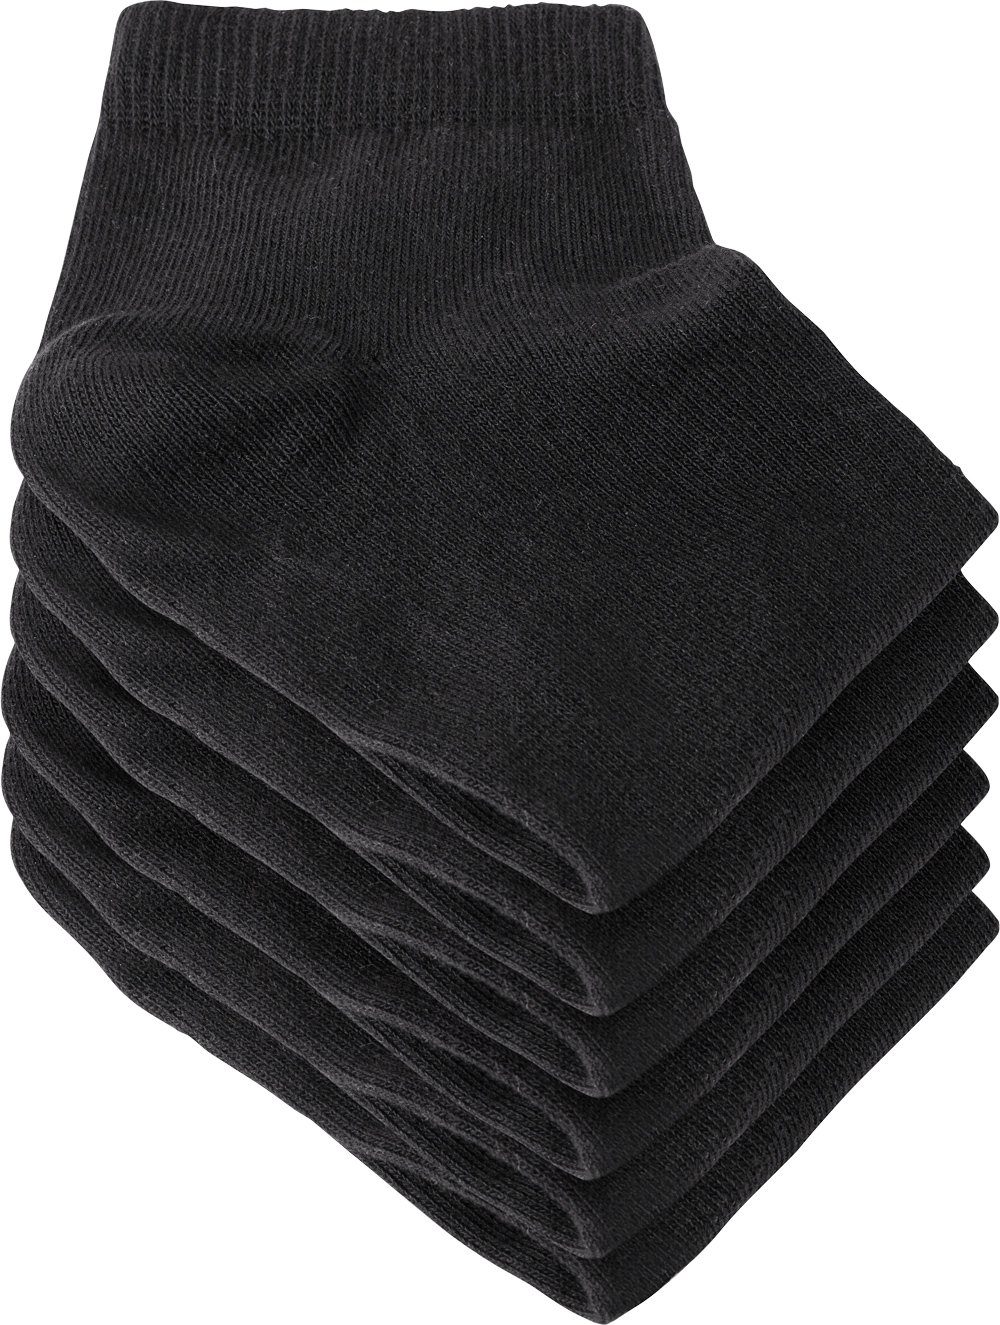 und Fuß 6er-Pack) Socken an schwarz feuchtigkeitsregulierend Nordcap passt den an, sich (Packung, perfekt atmungsaktiv